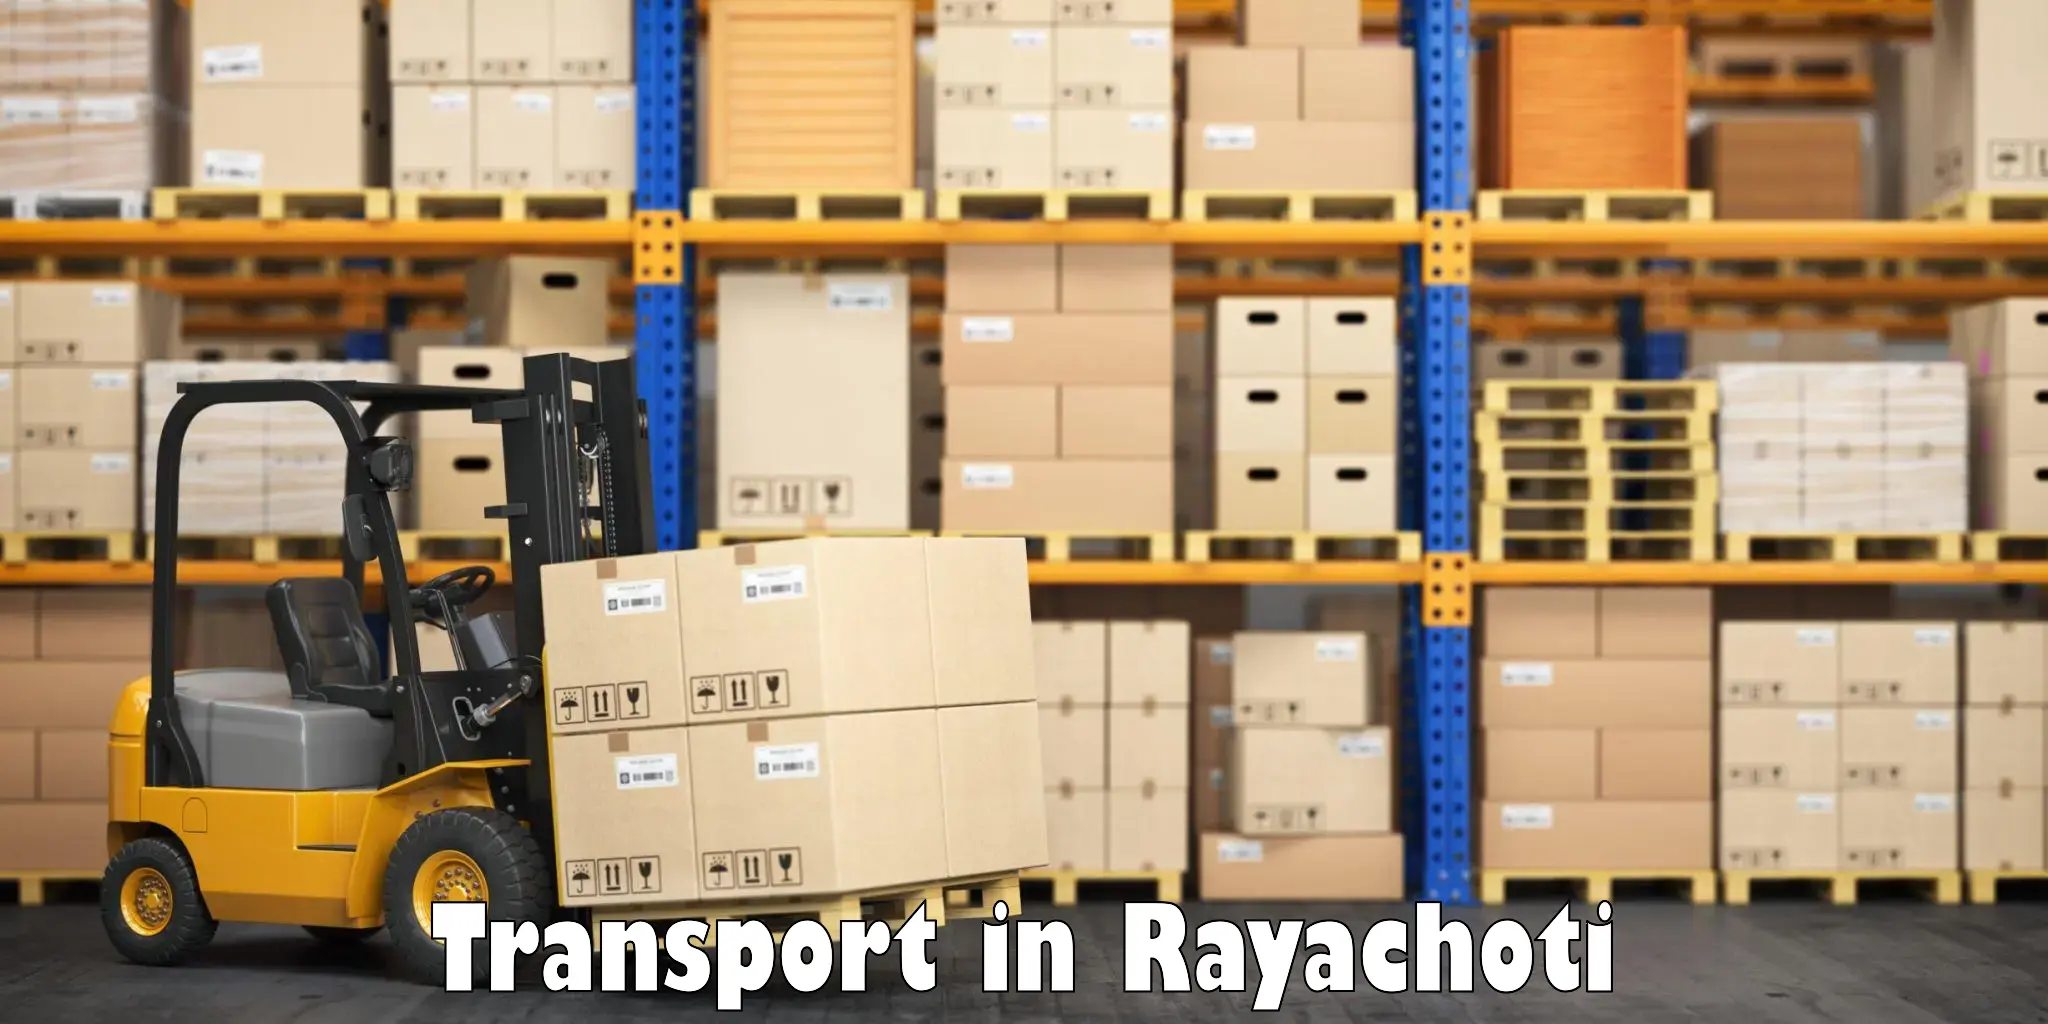 Transport in sharing in Rayachoti